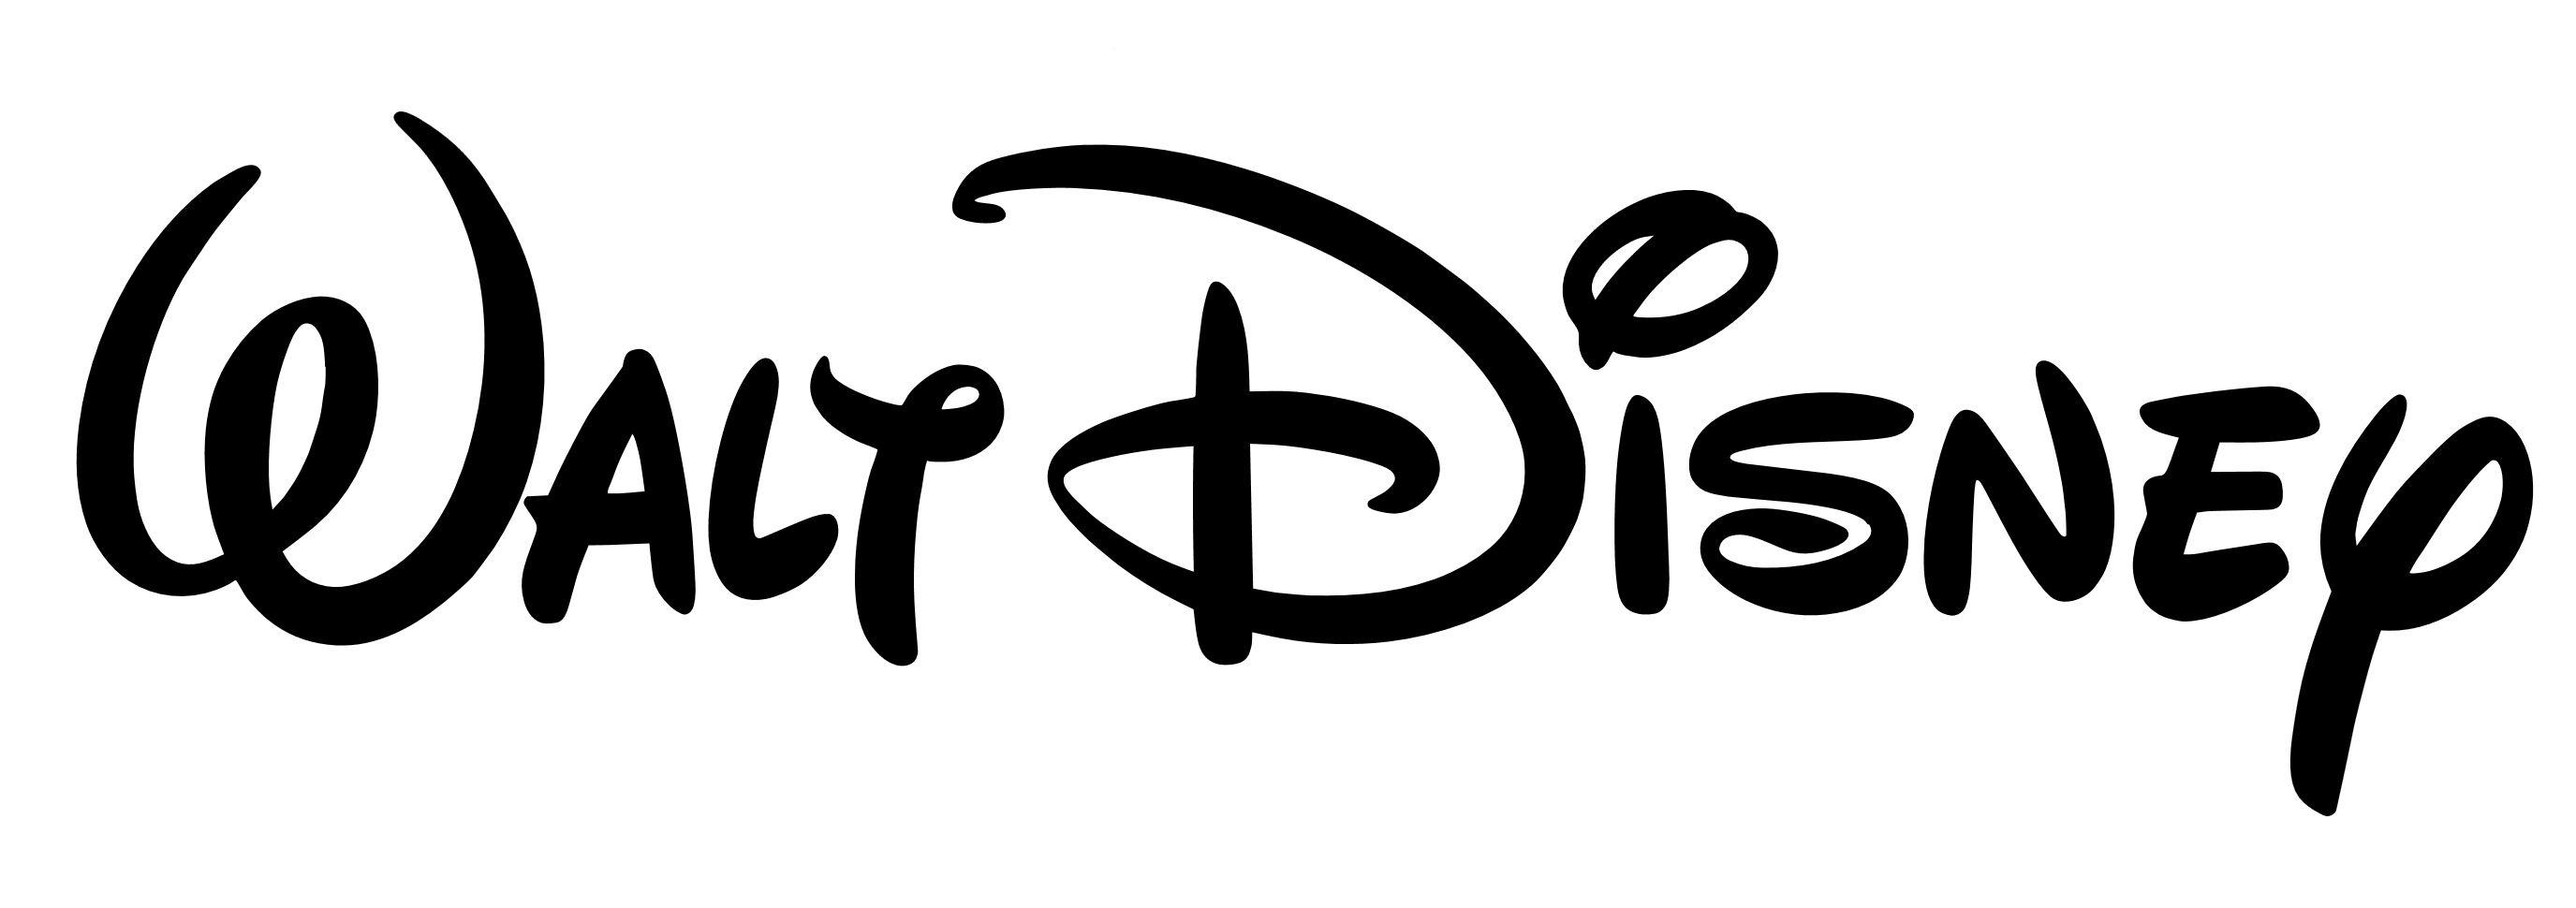 Disny Hidden in Logo - Walt Disney Logo, symbol, meaning, History and Evolution